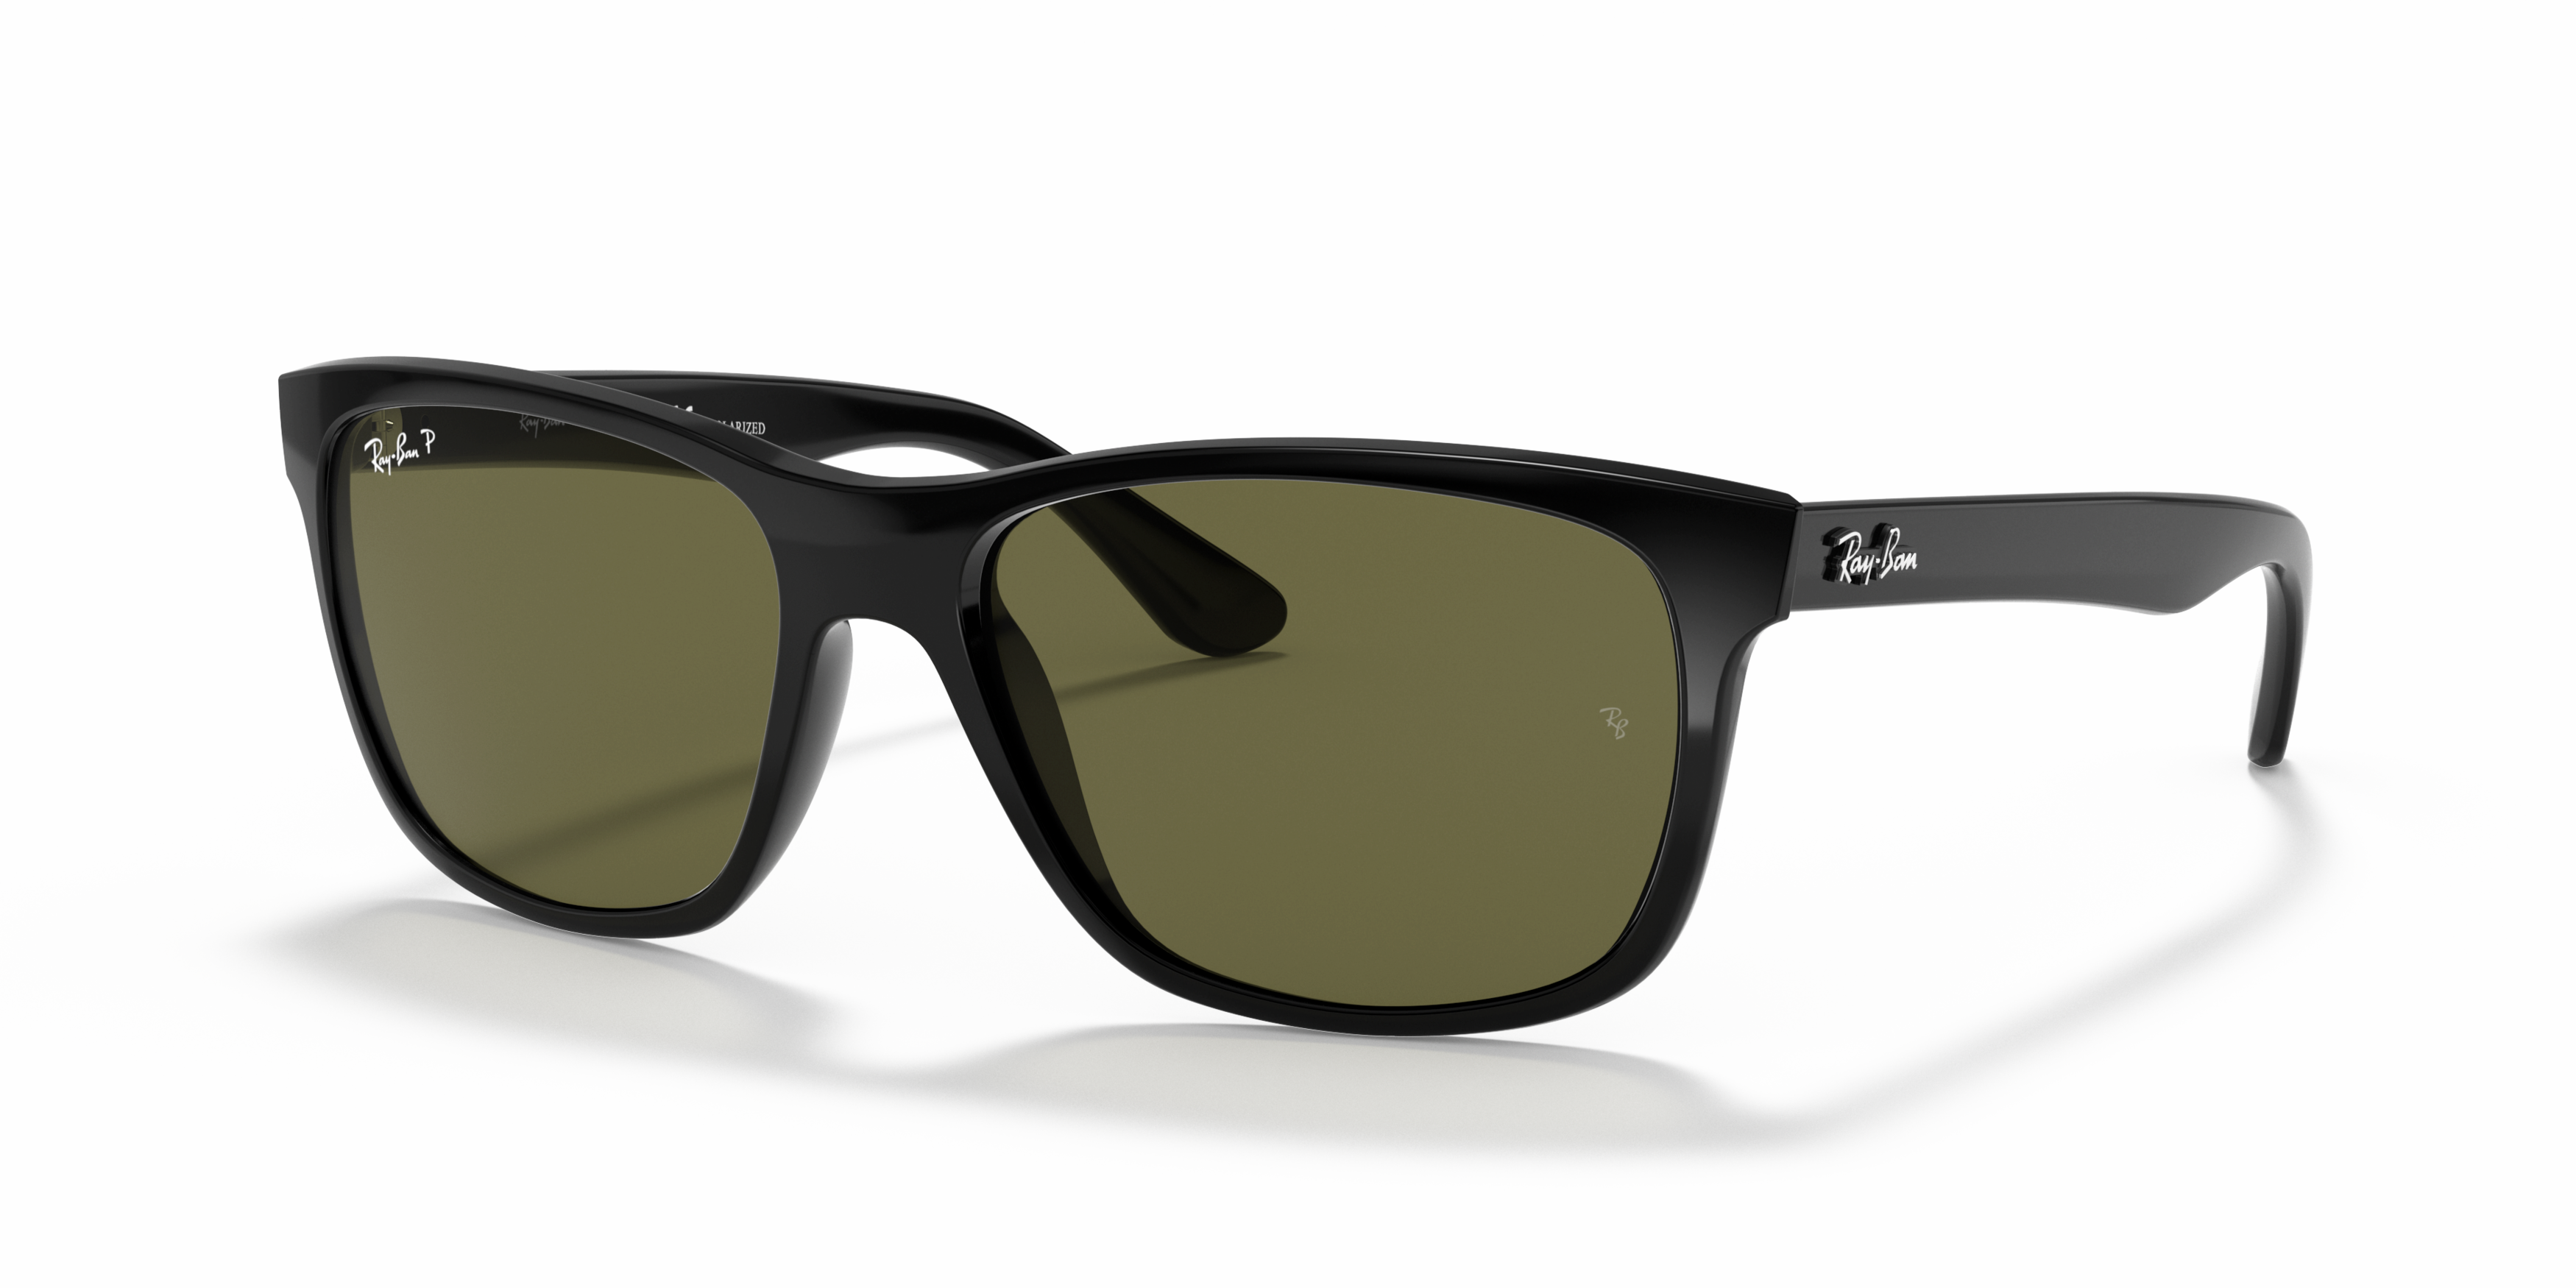 Angle_Left01 Ray-Ban RB 4181 (601/9A) Sunglasses Green / Black